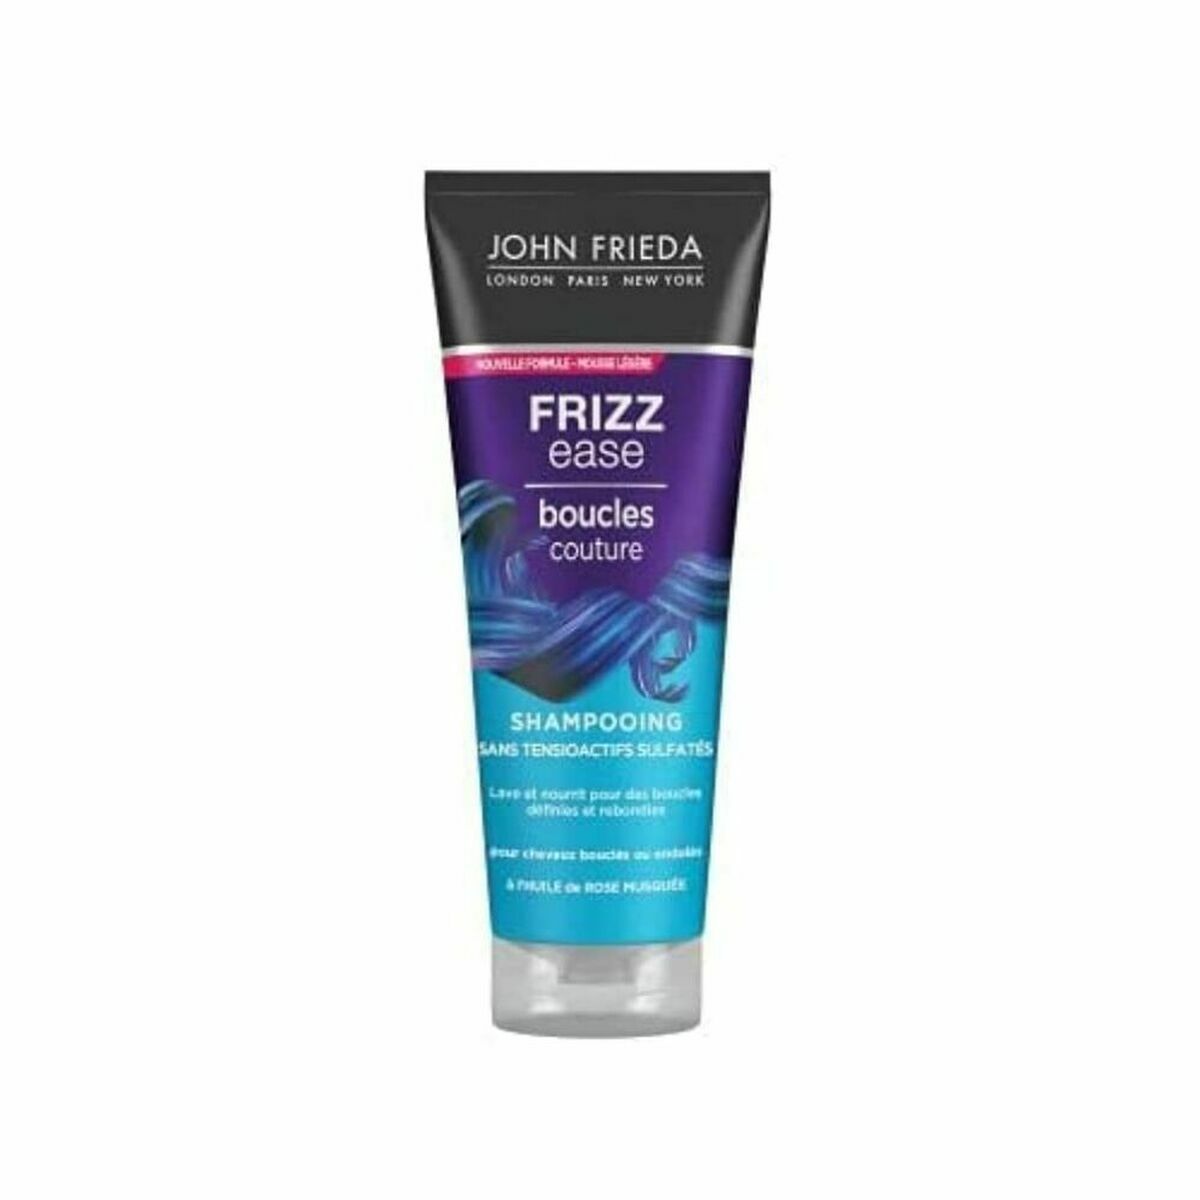 Shampoo John Frieda Frizz Ease Boucles Couture 250 ml (Restauriert A)